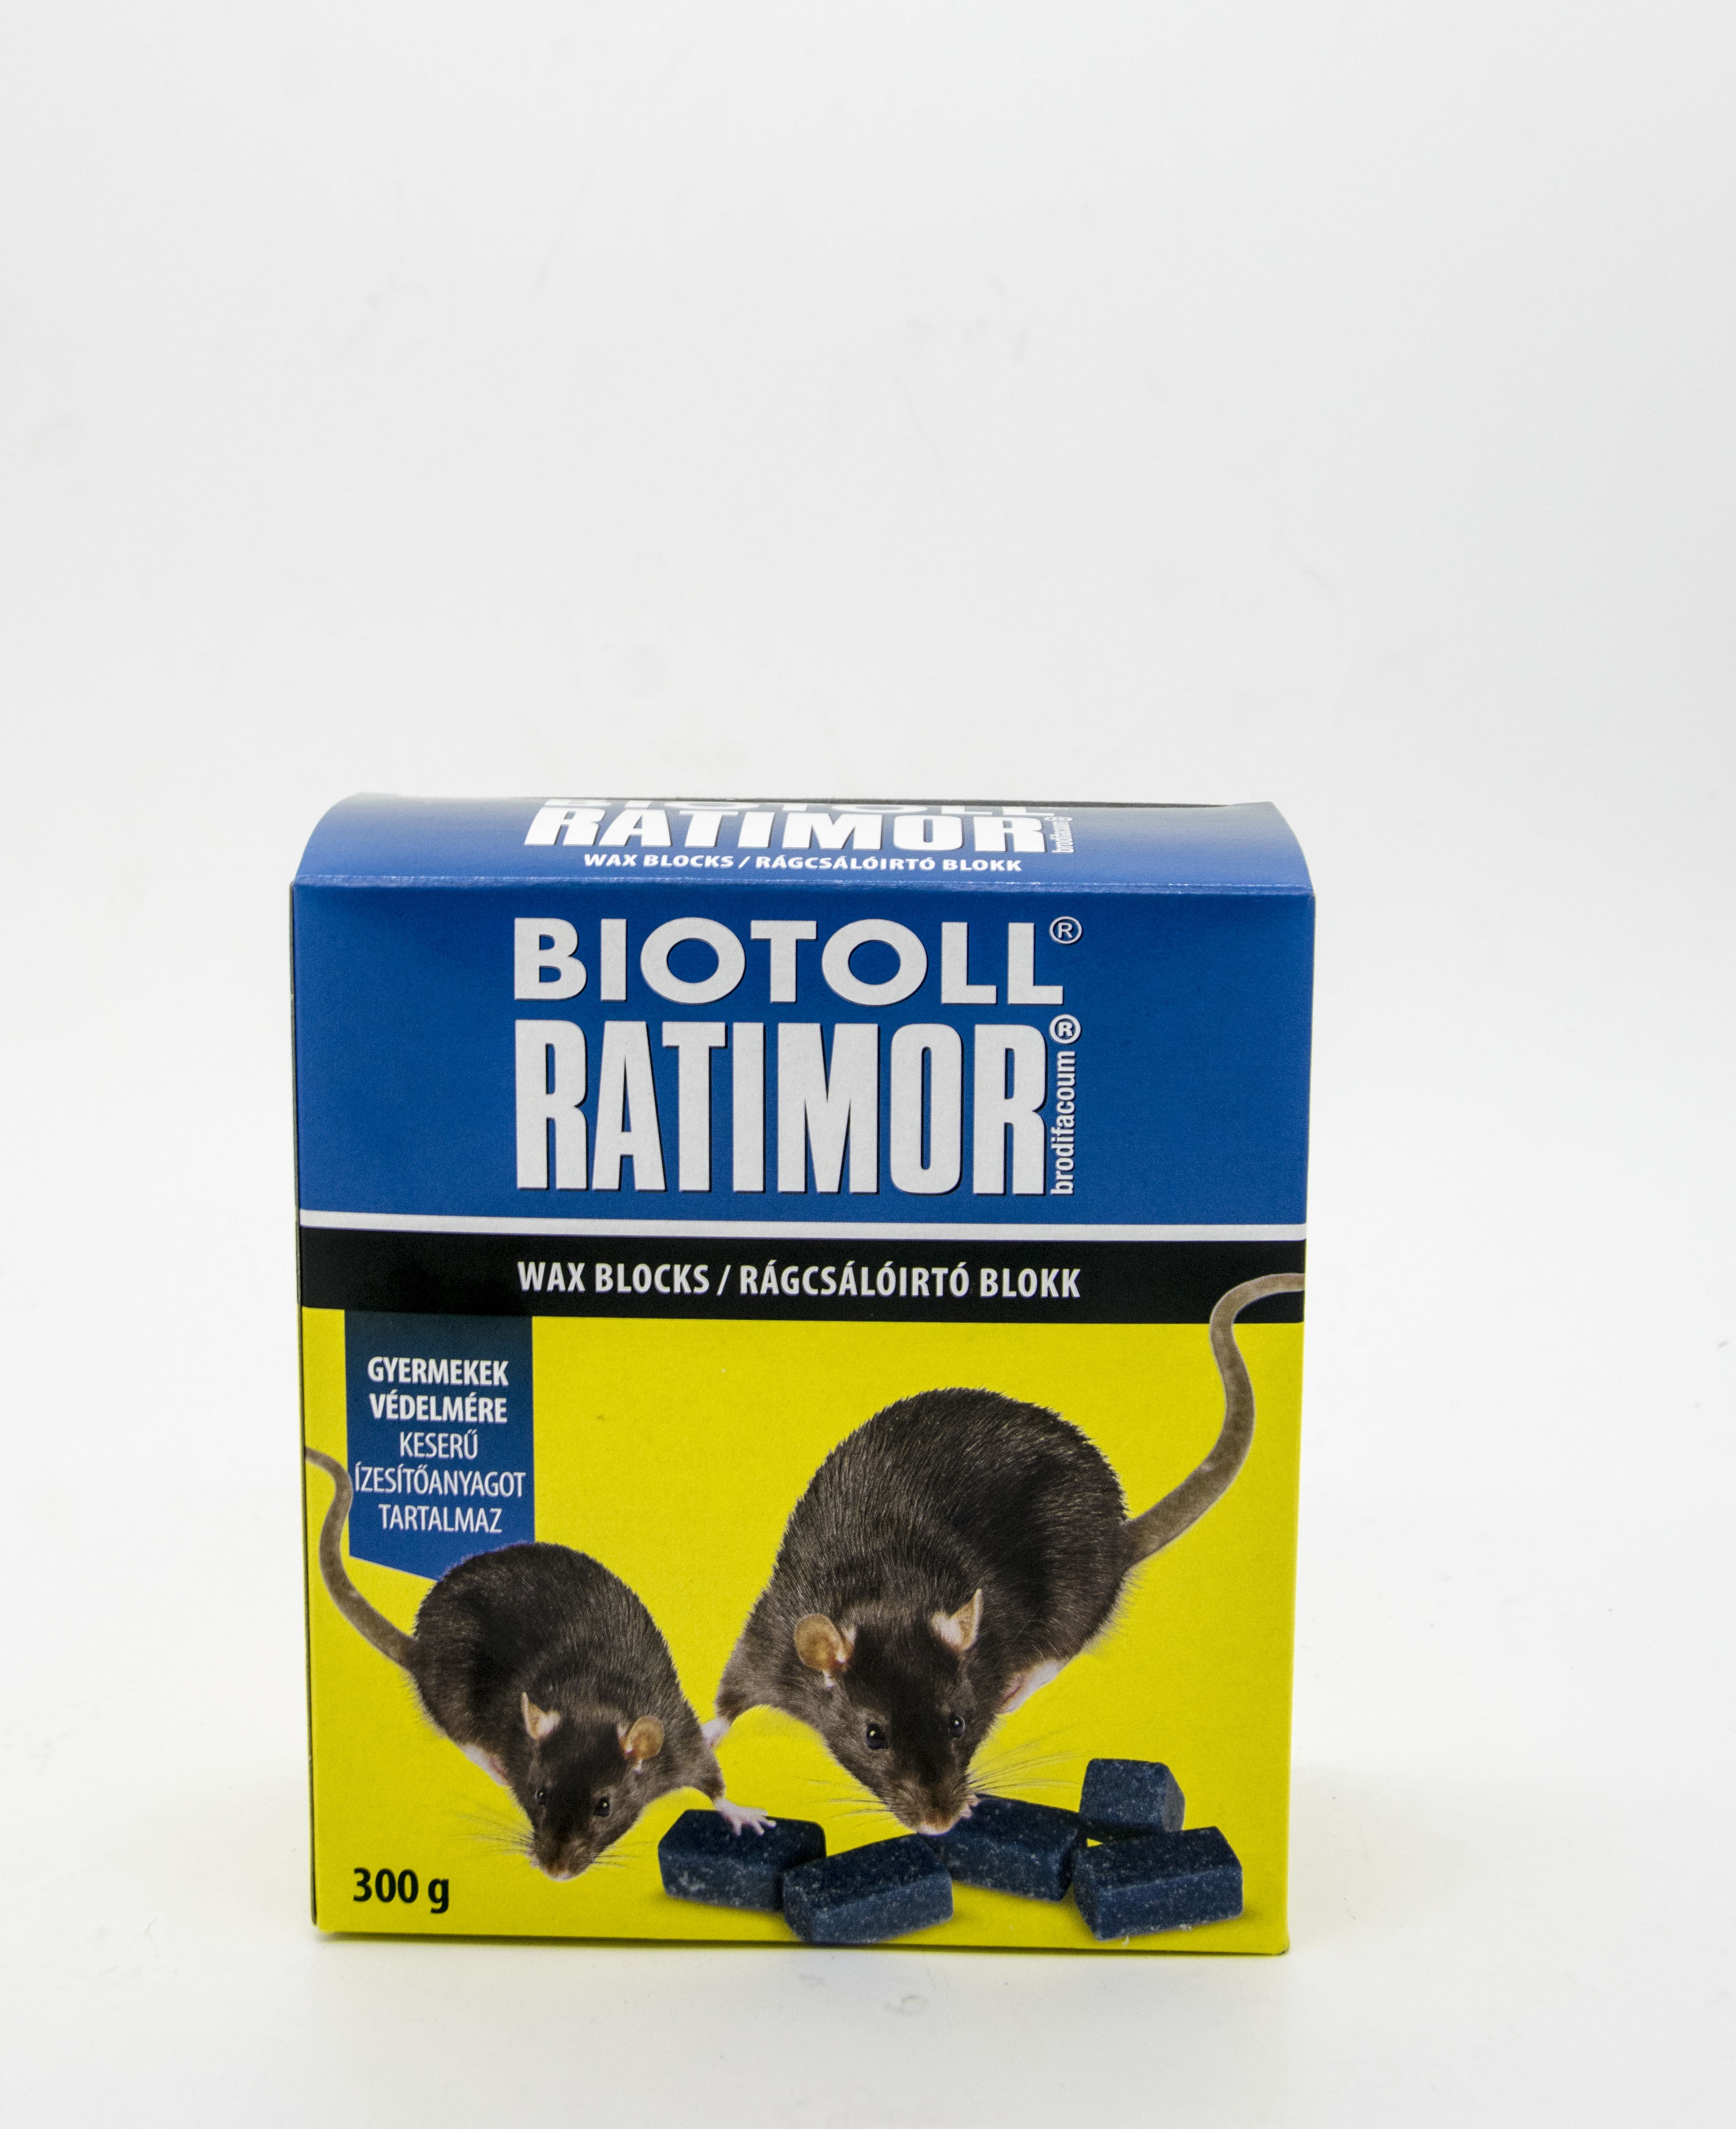 Biotoll Ratimor parfinos rágcsálóírtó blokk 300 g